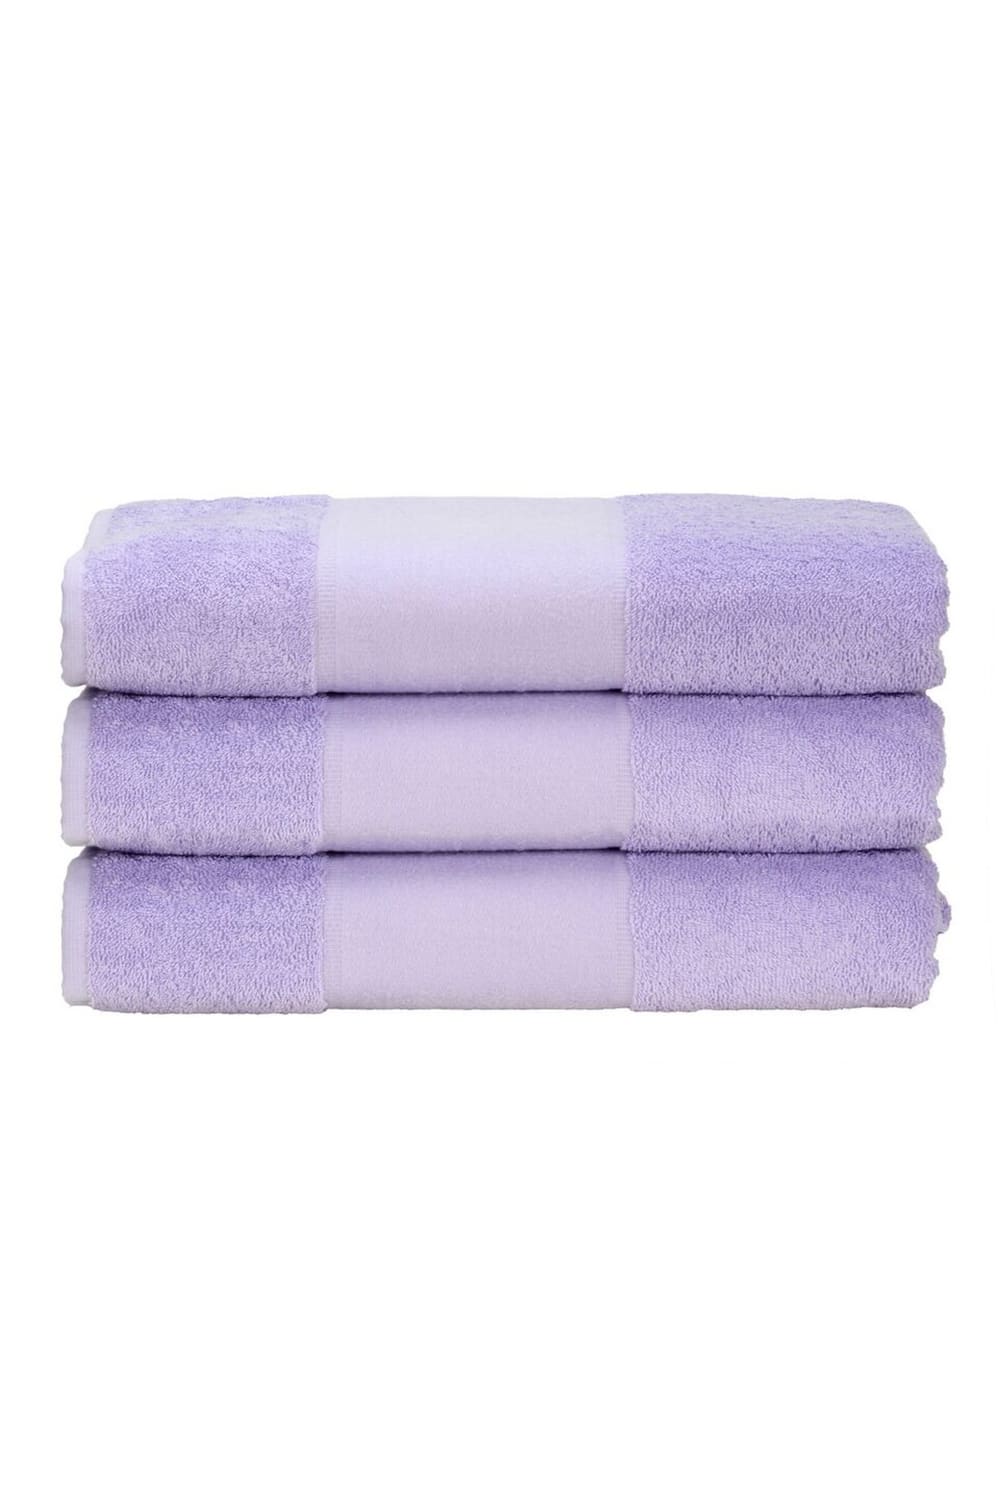 A&R Towels Print-Me Hand Towel (Light Purple) (One Size)